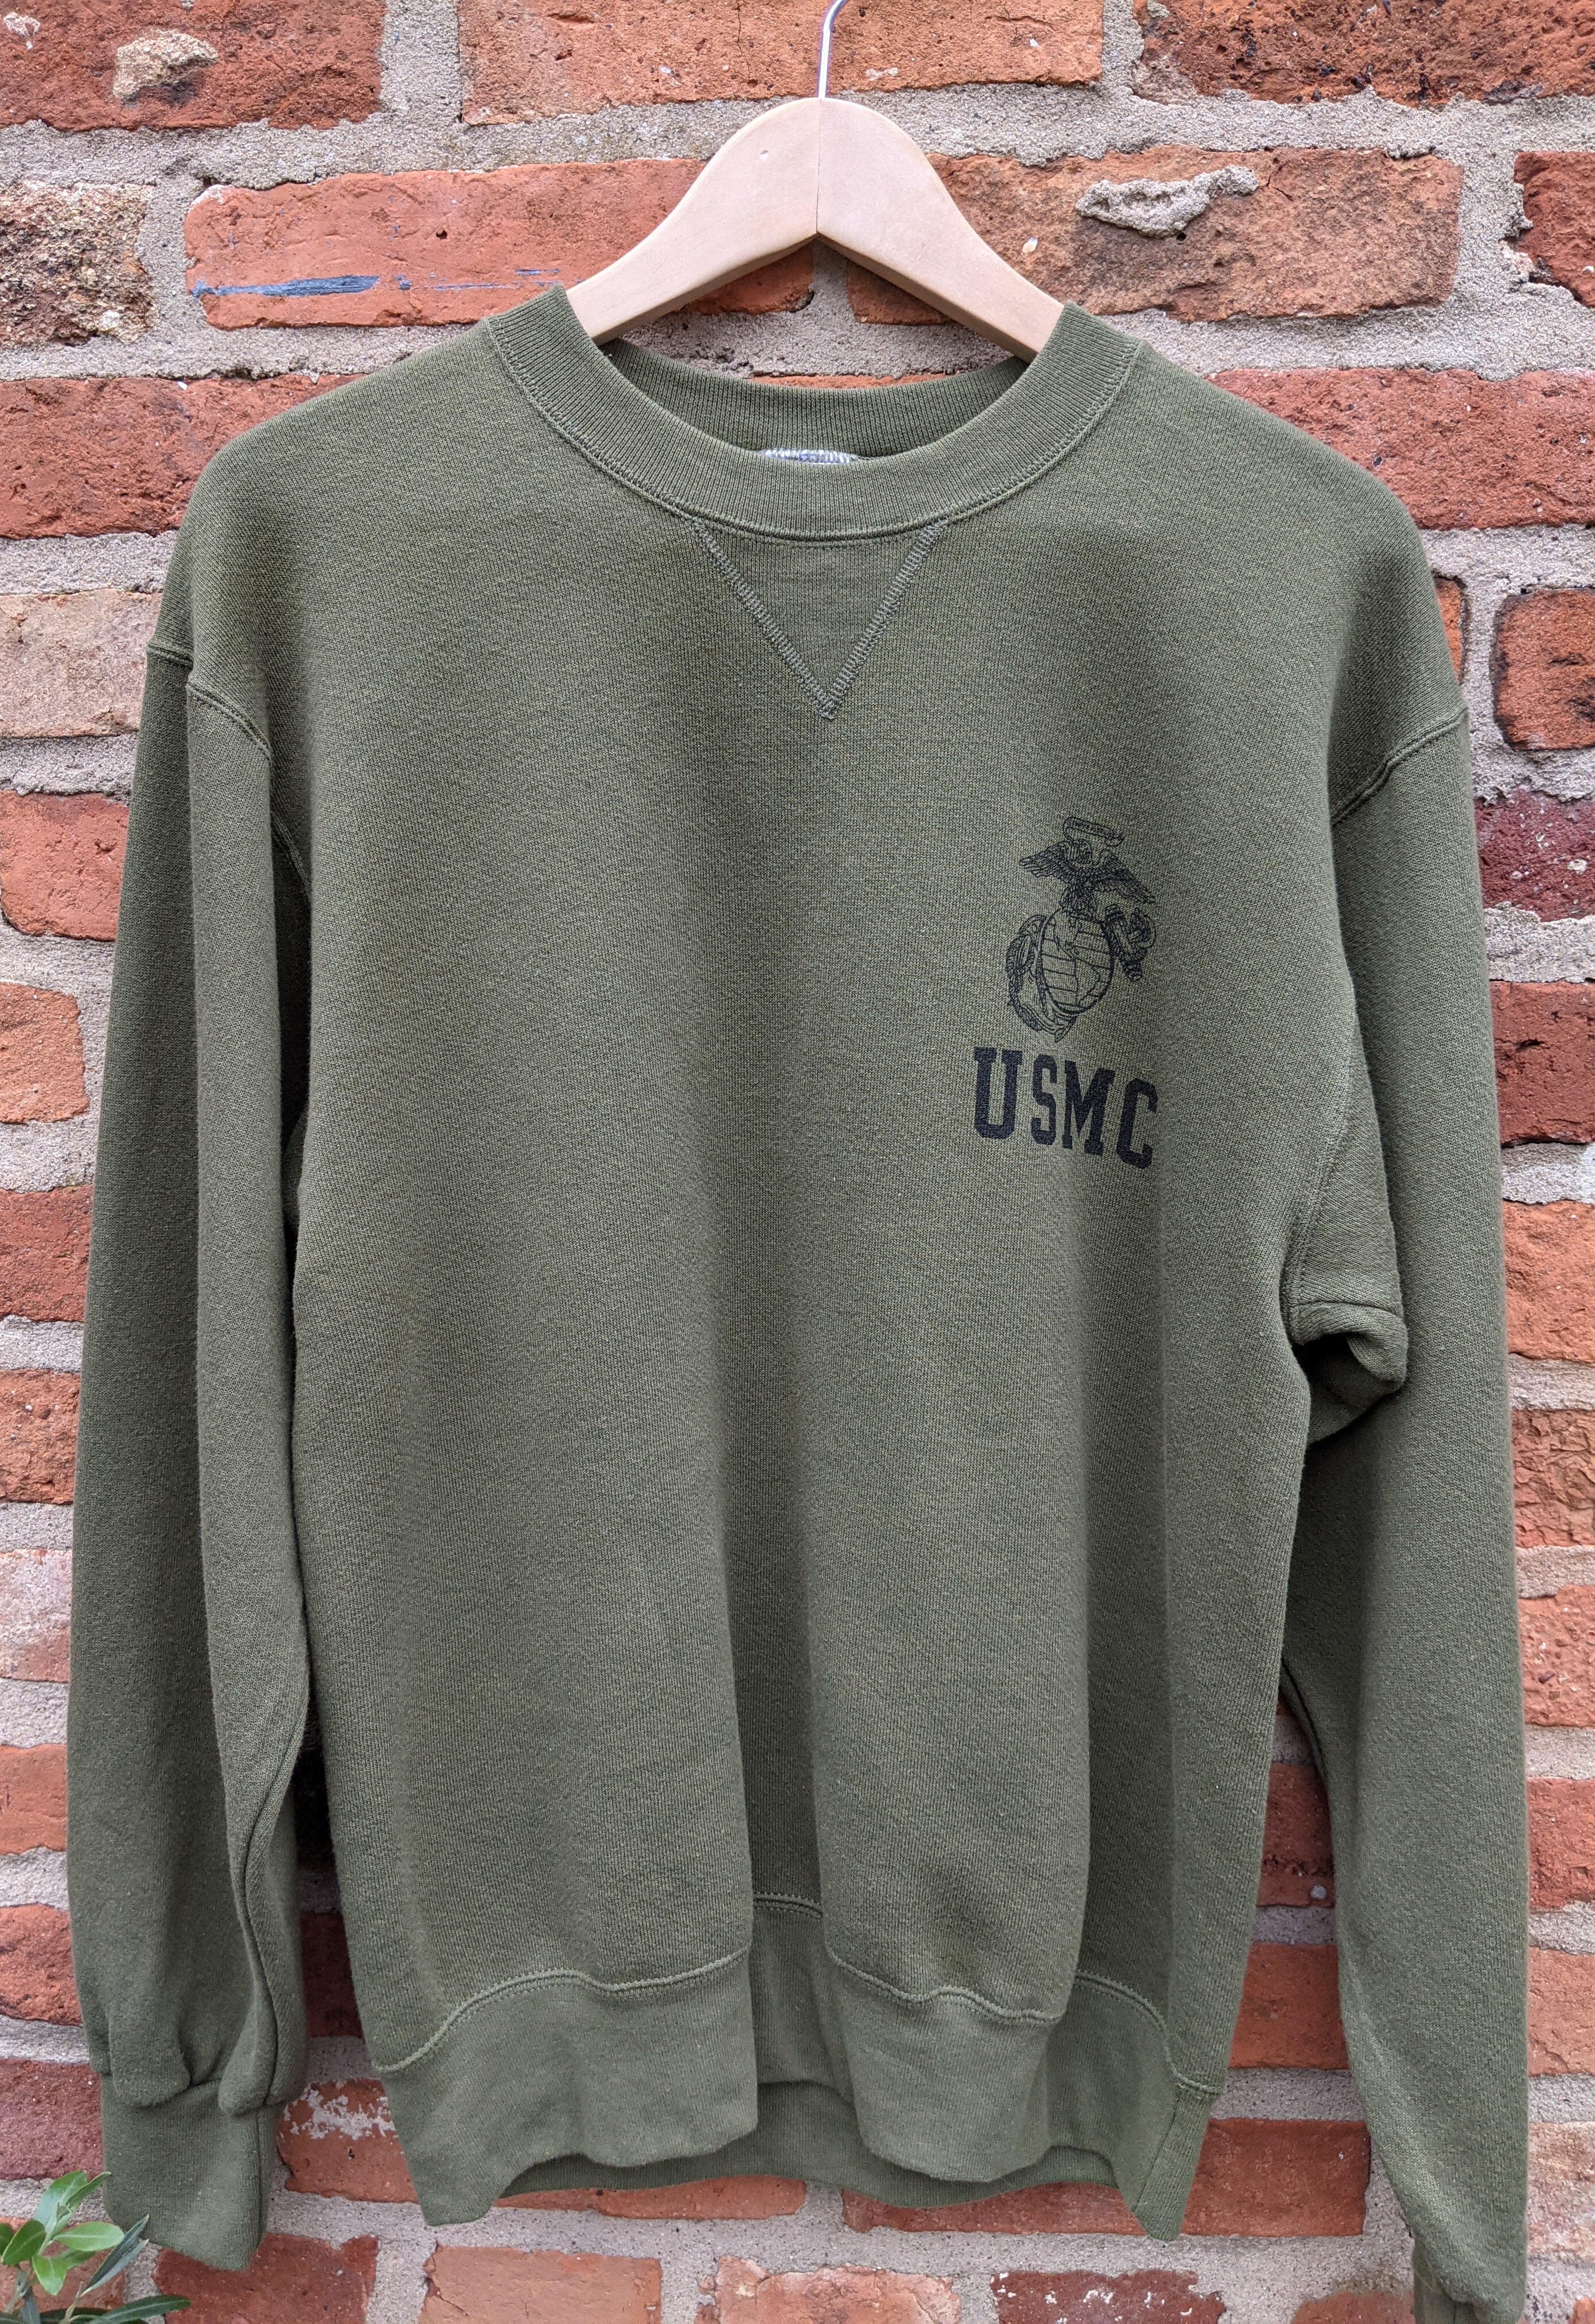 TuneSquad hoody & USMC sweatshirt